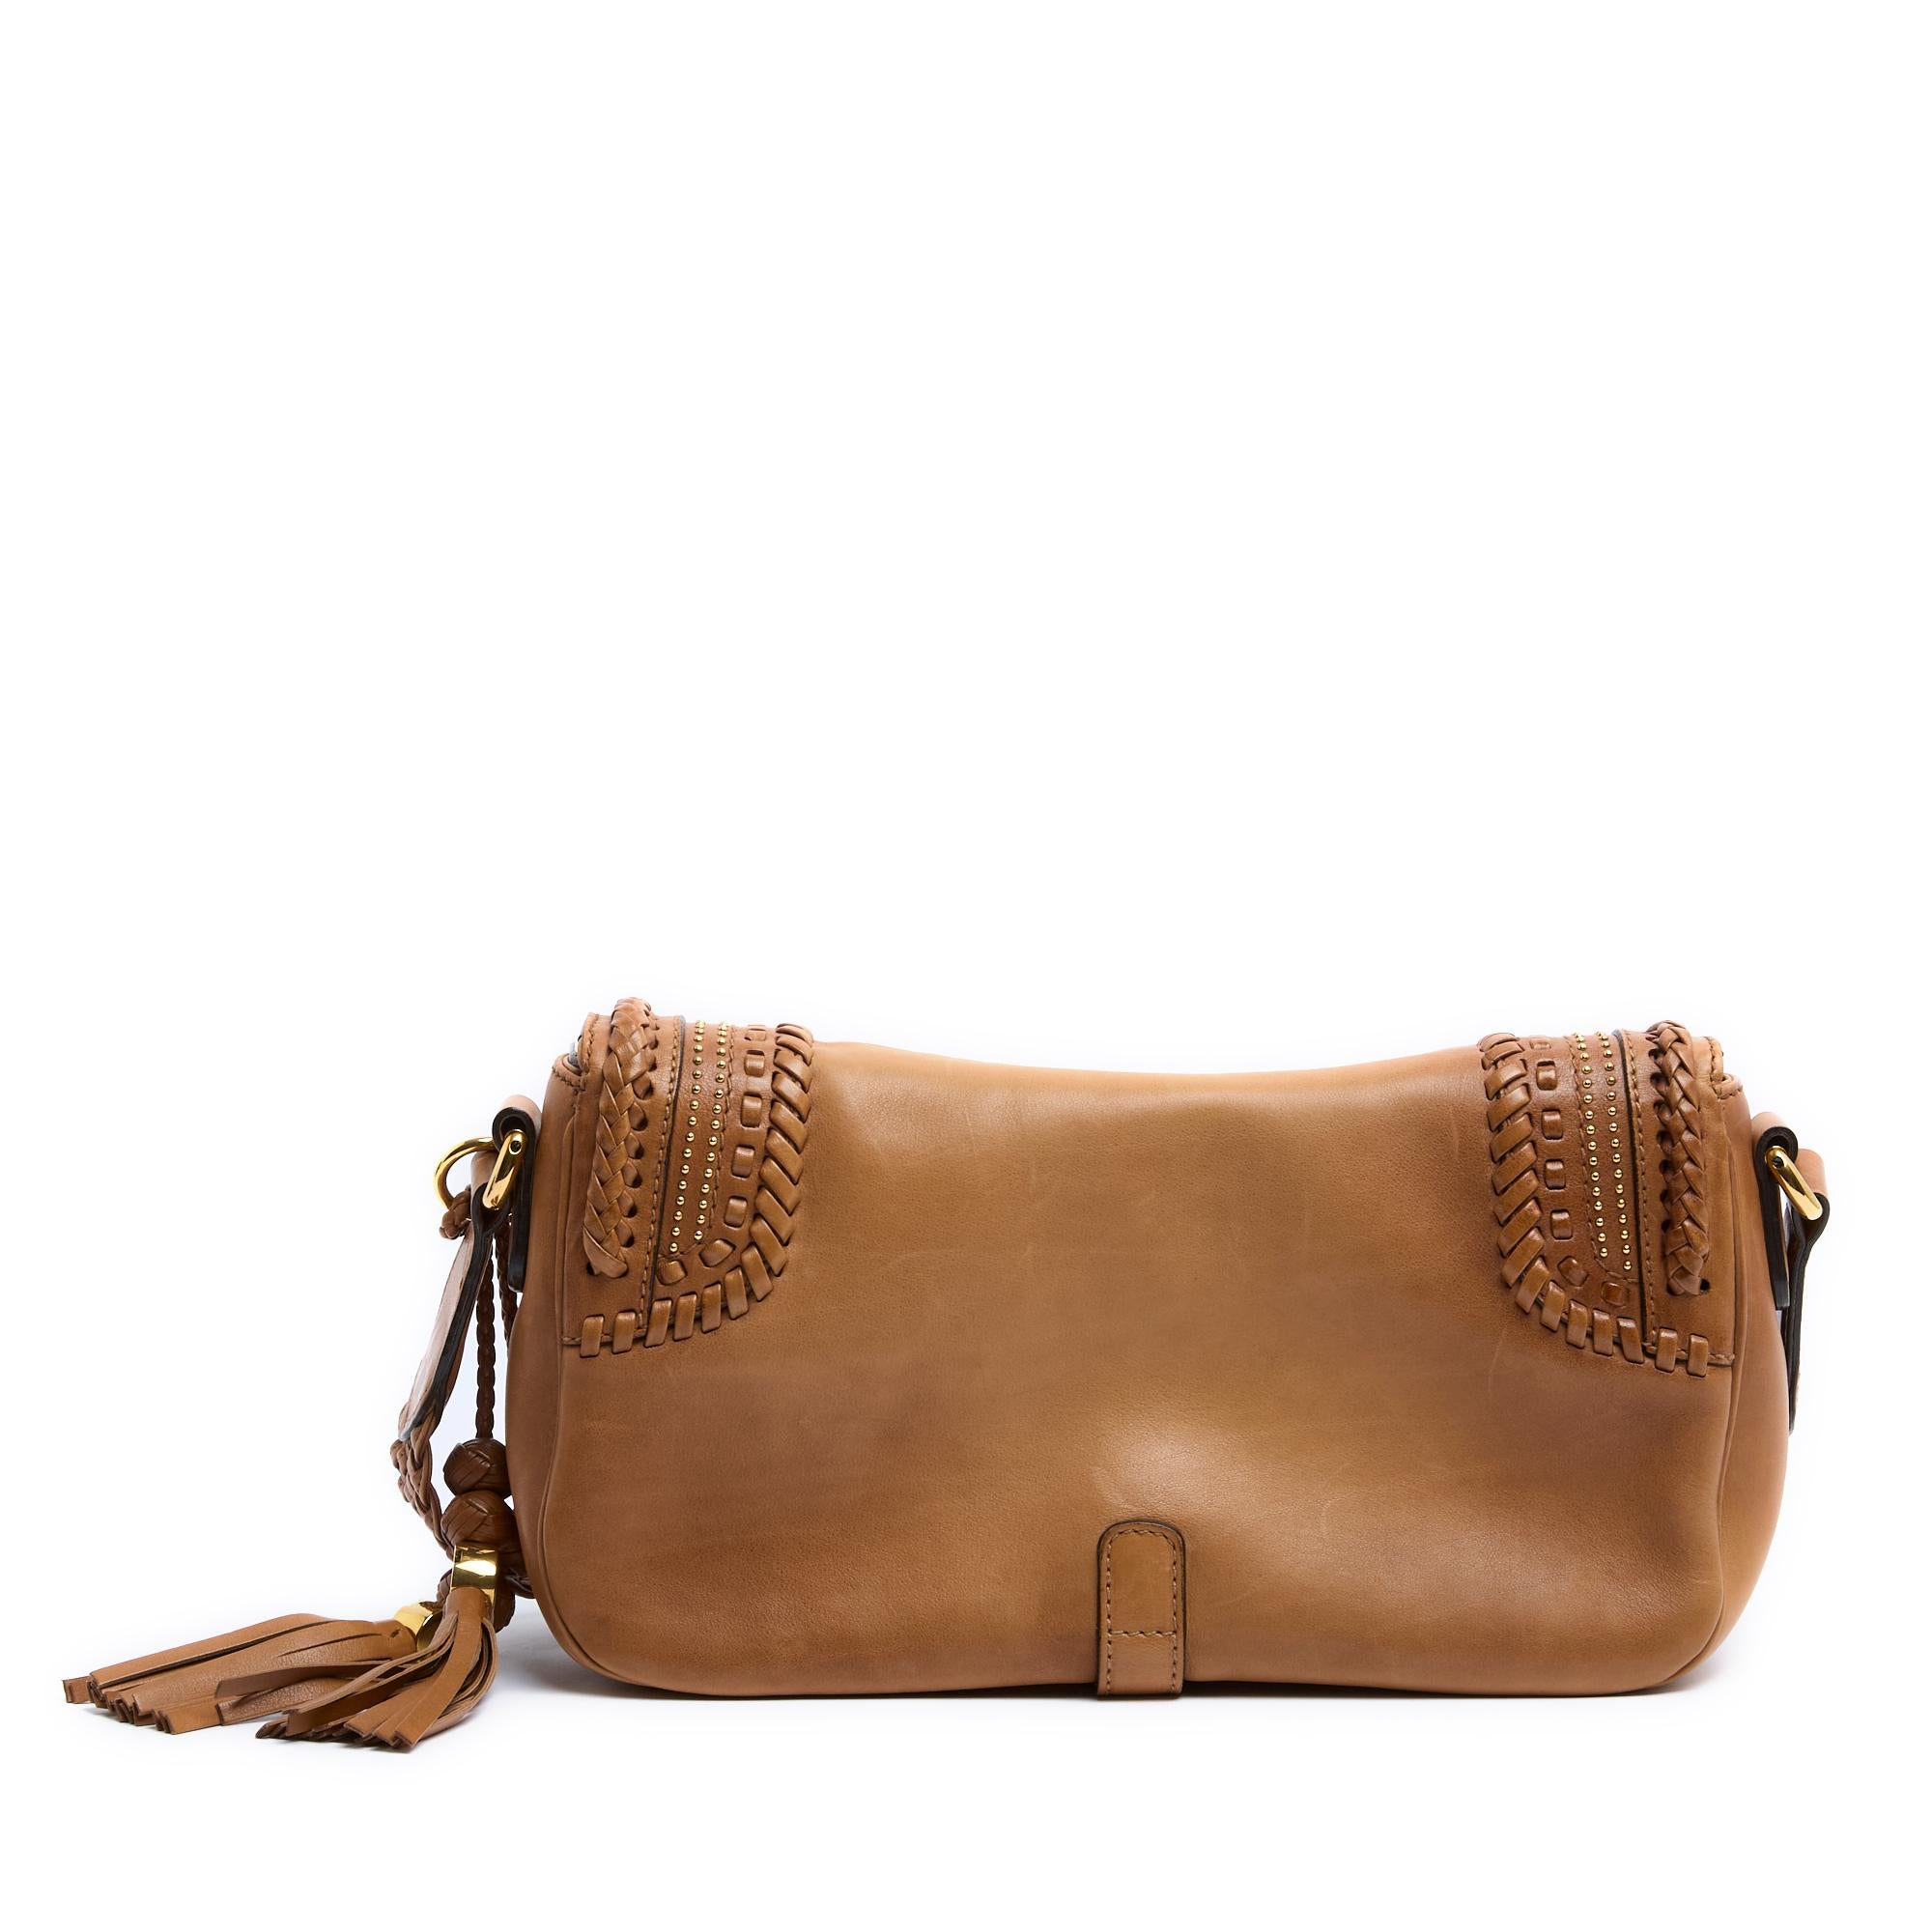 Gucci sac Marrakech Natural Leather Intrecciato Bag Limited Edition 1